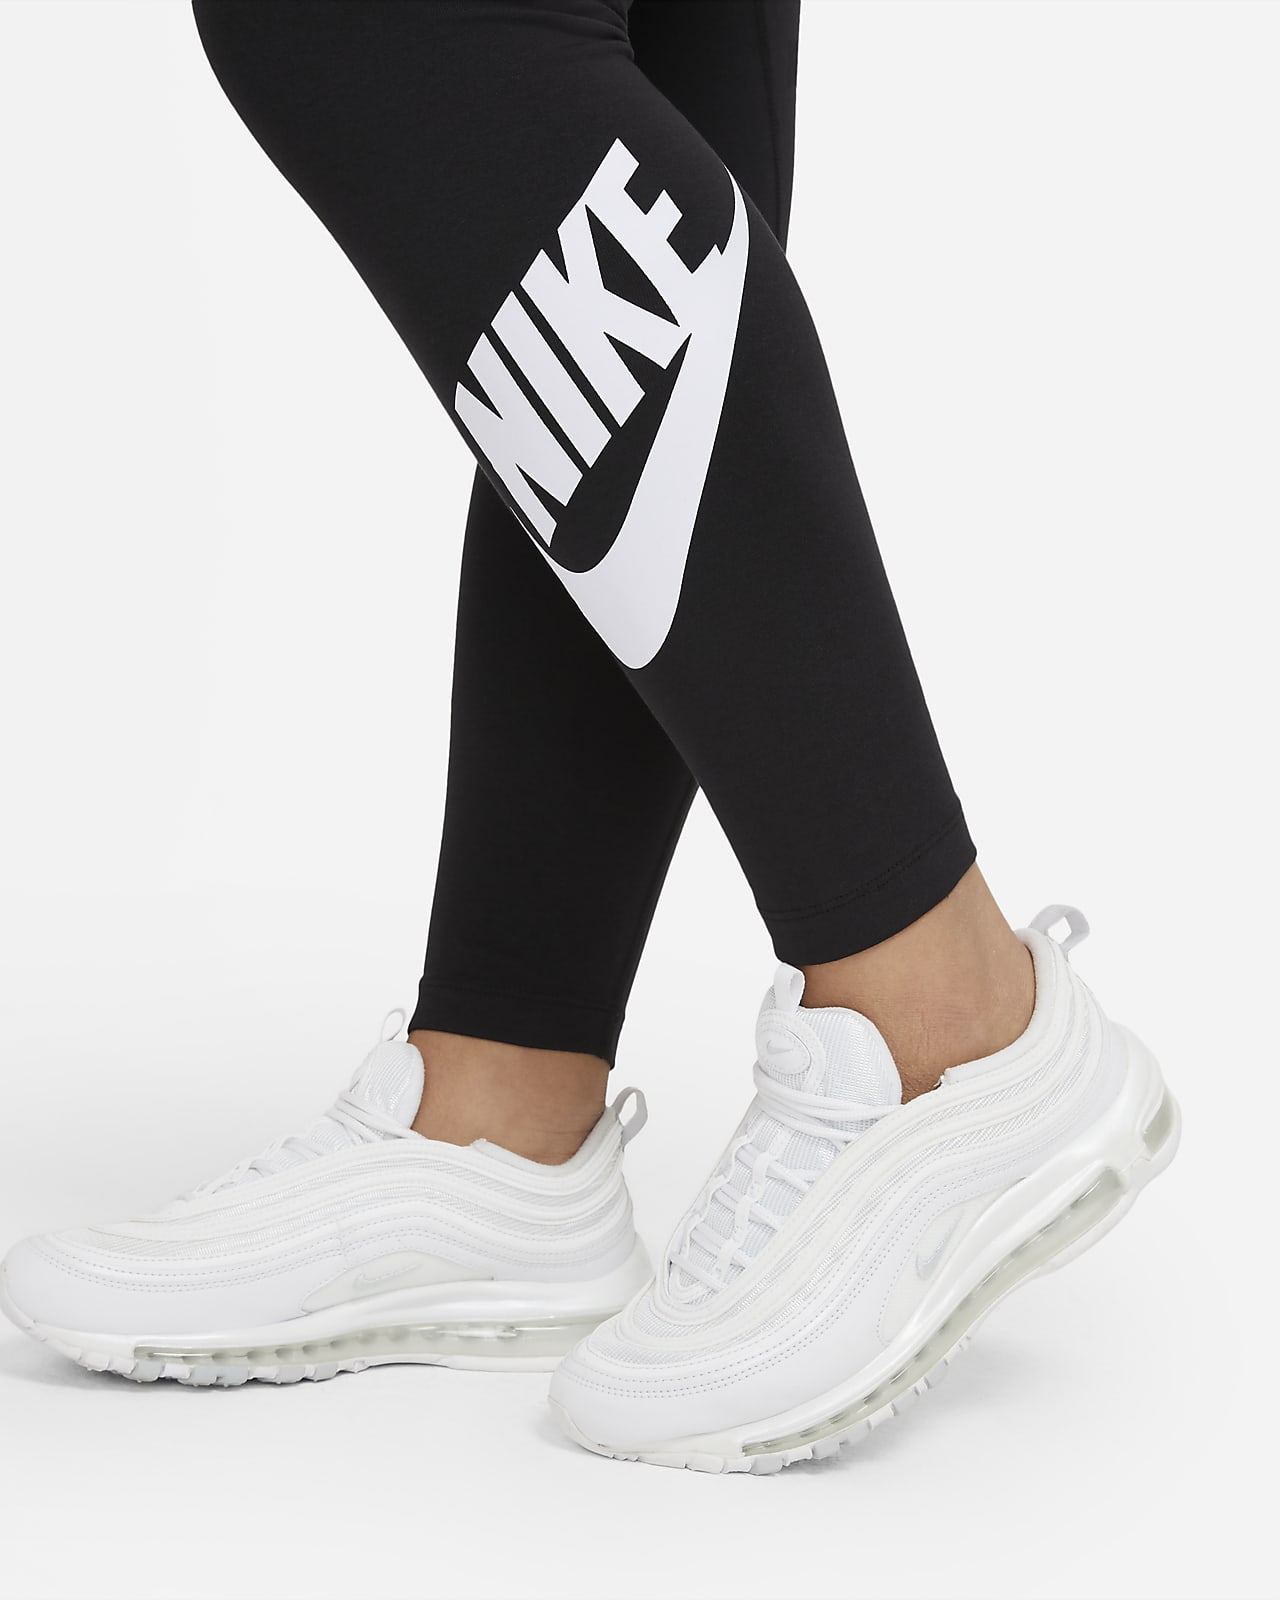 Mujer Lifestyle Mallas y leggings. Nike ES